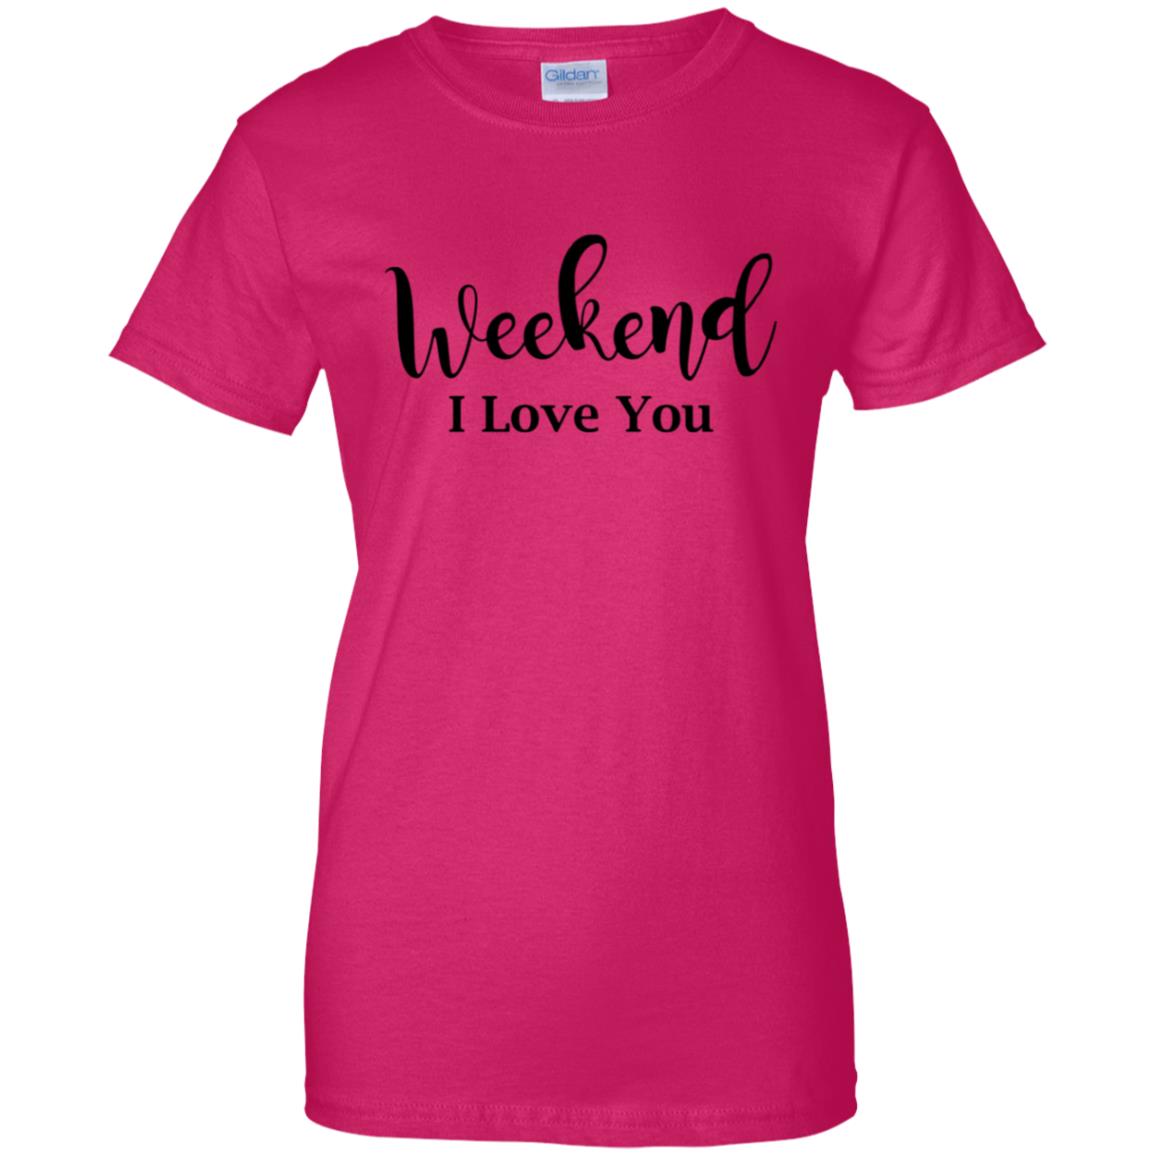 Weekend I Love You Shirt - 10% Off - FavorMerch